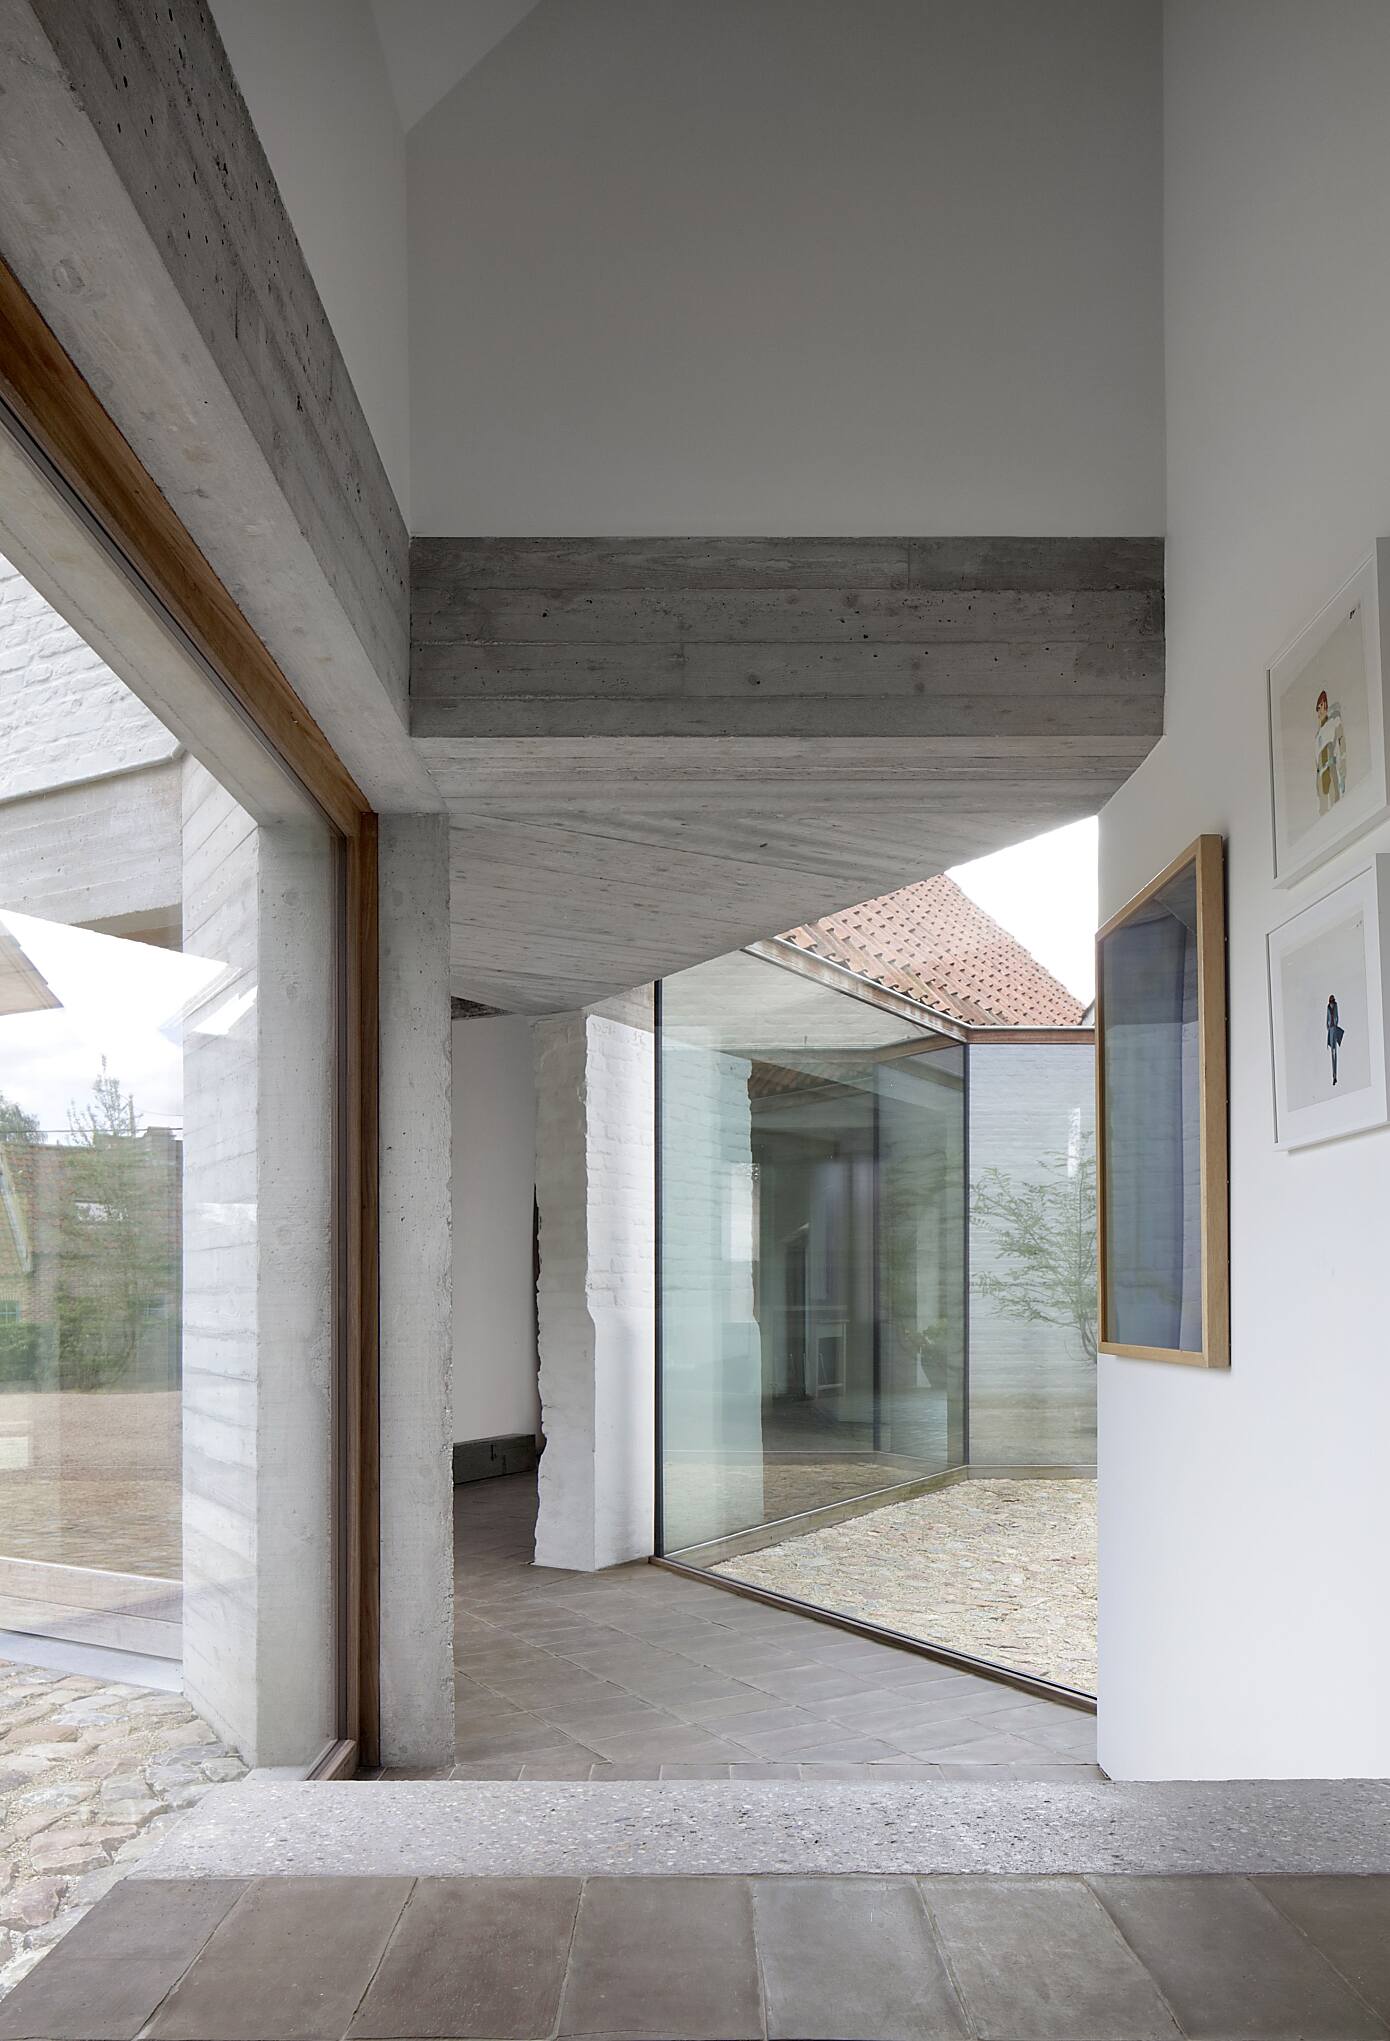 House BS by Graux & Baeyens Architecten